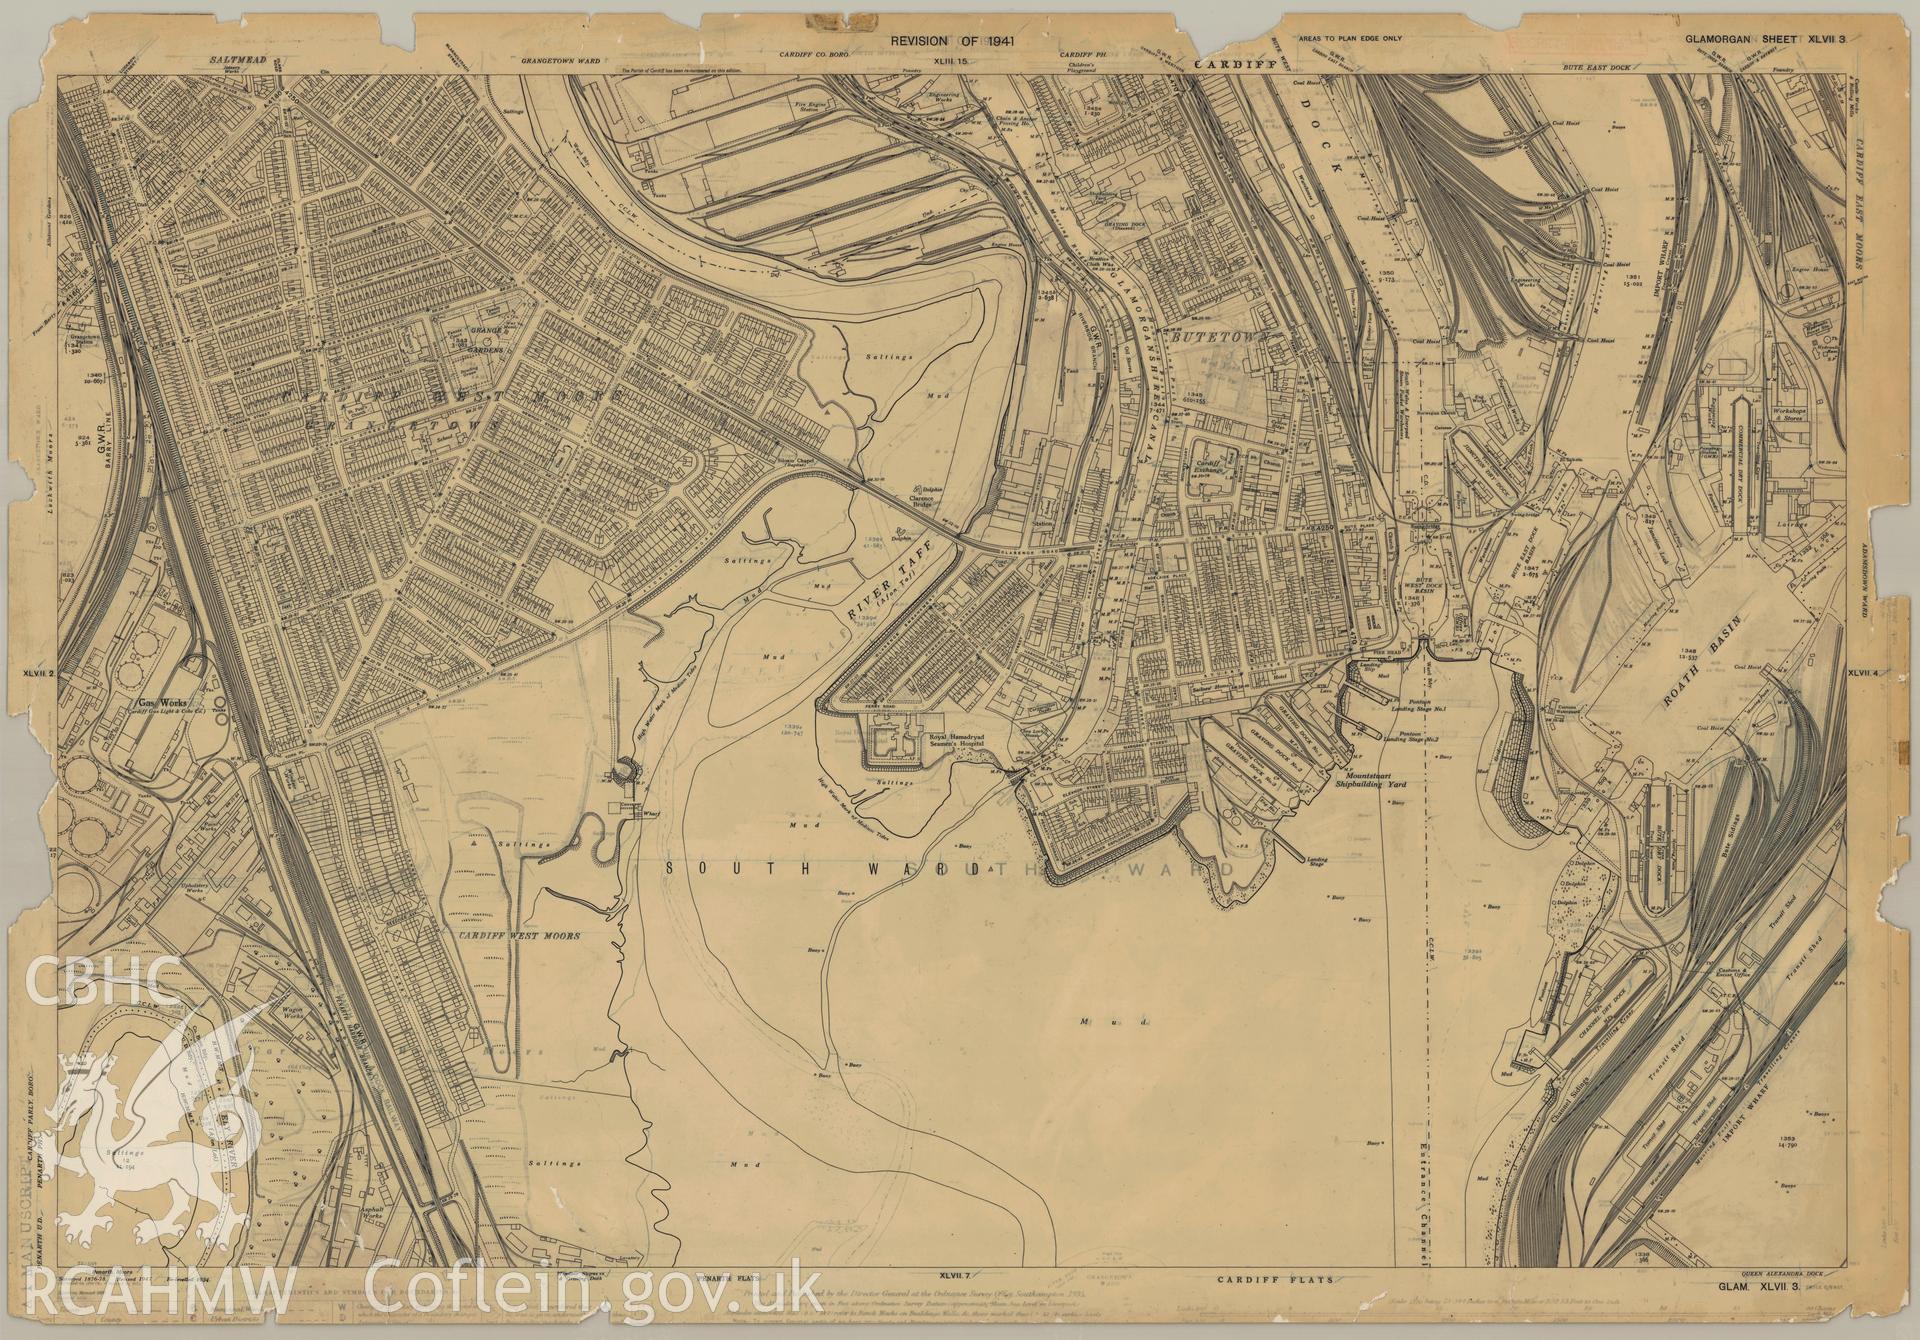 Digitized copy of Ordnance Survey 25 inch fourth edition map of Cardiff Docks area 1941.